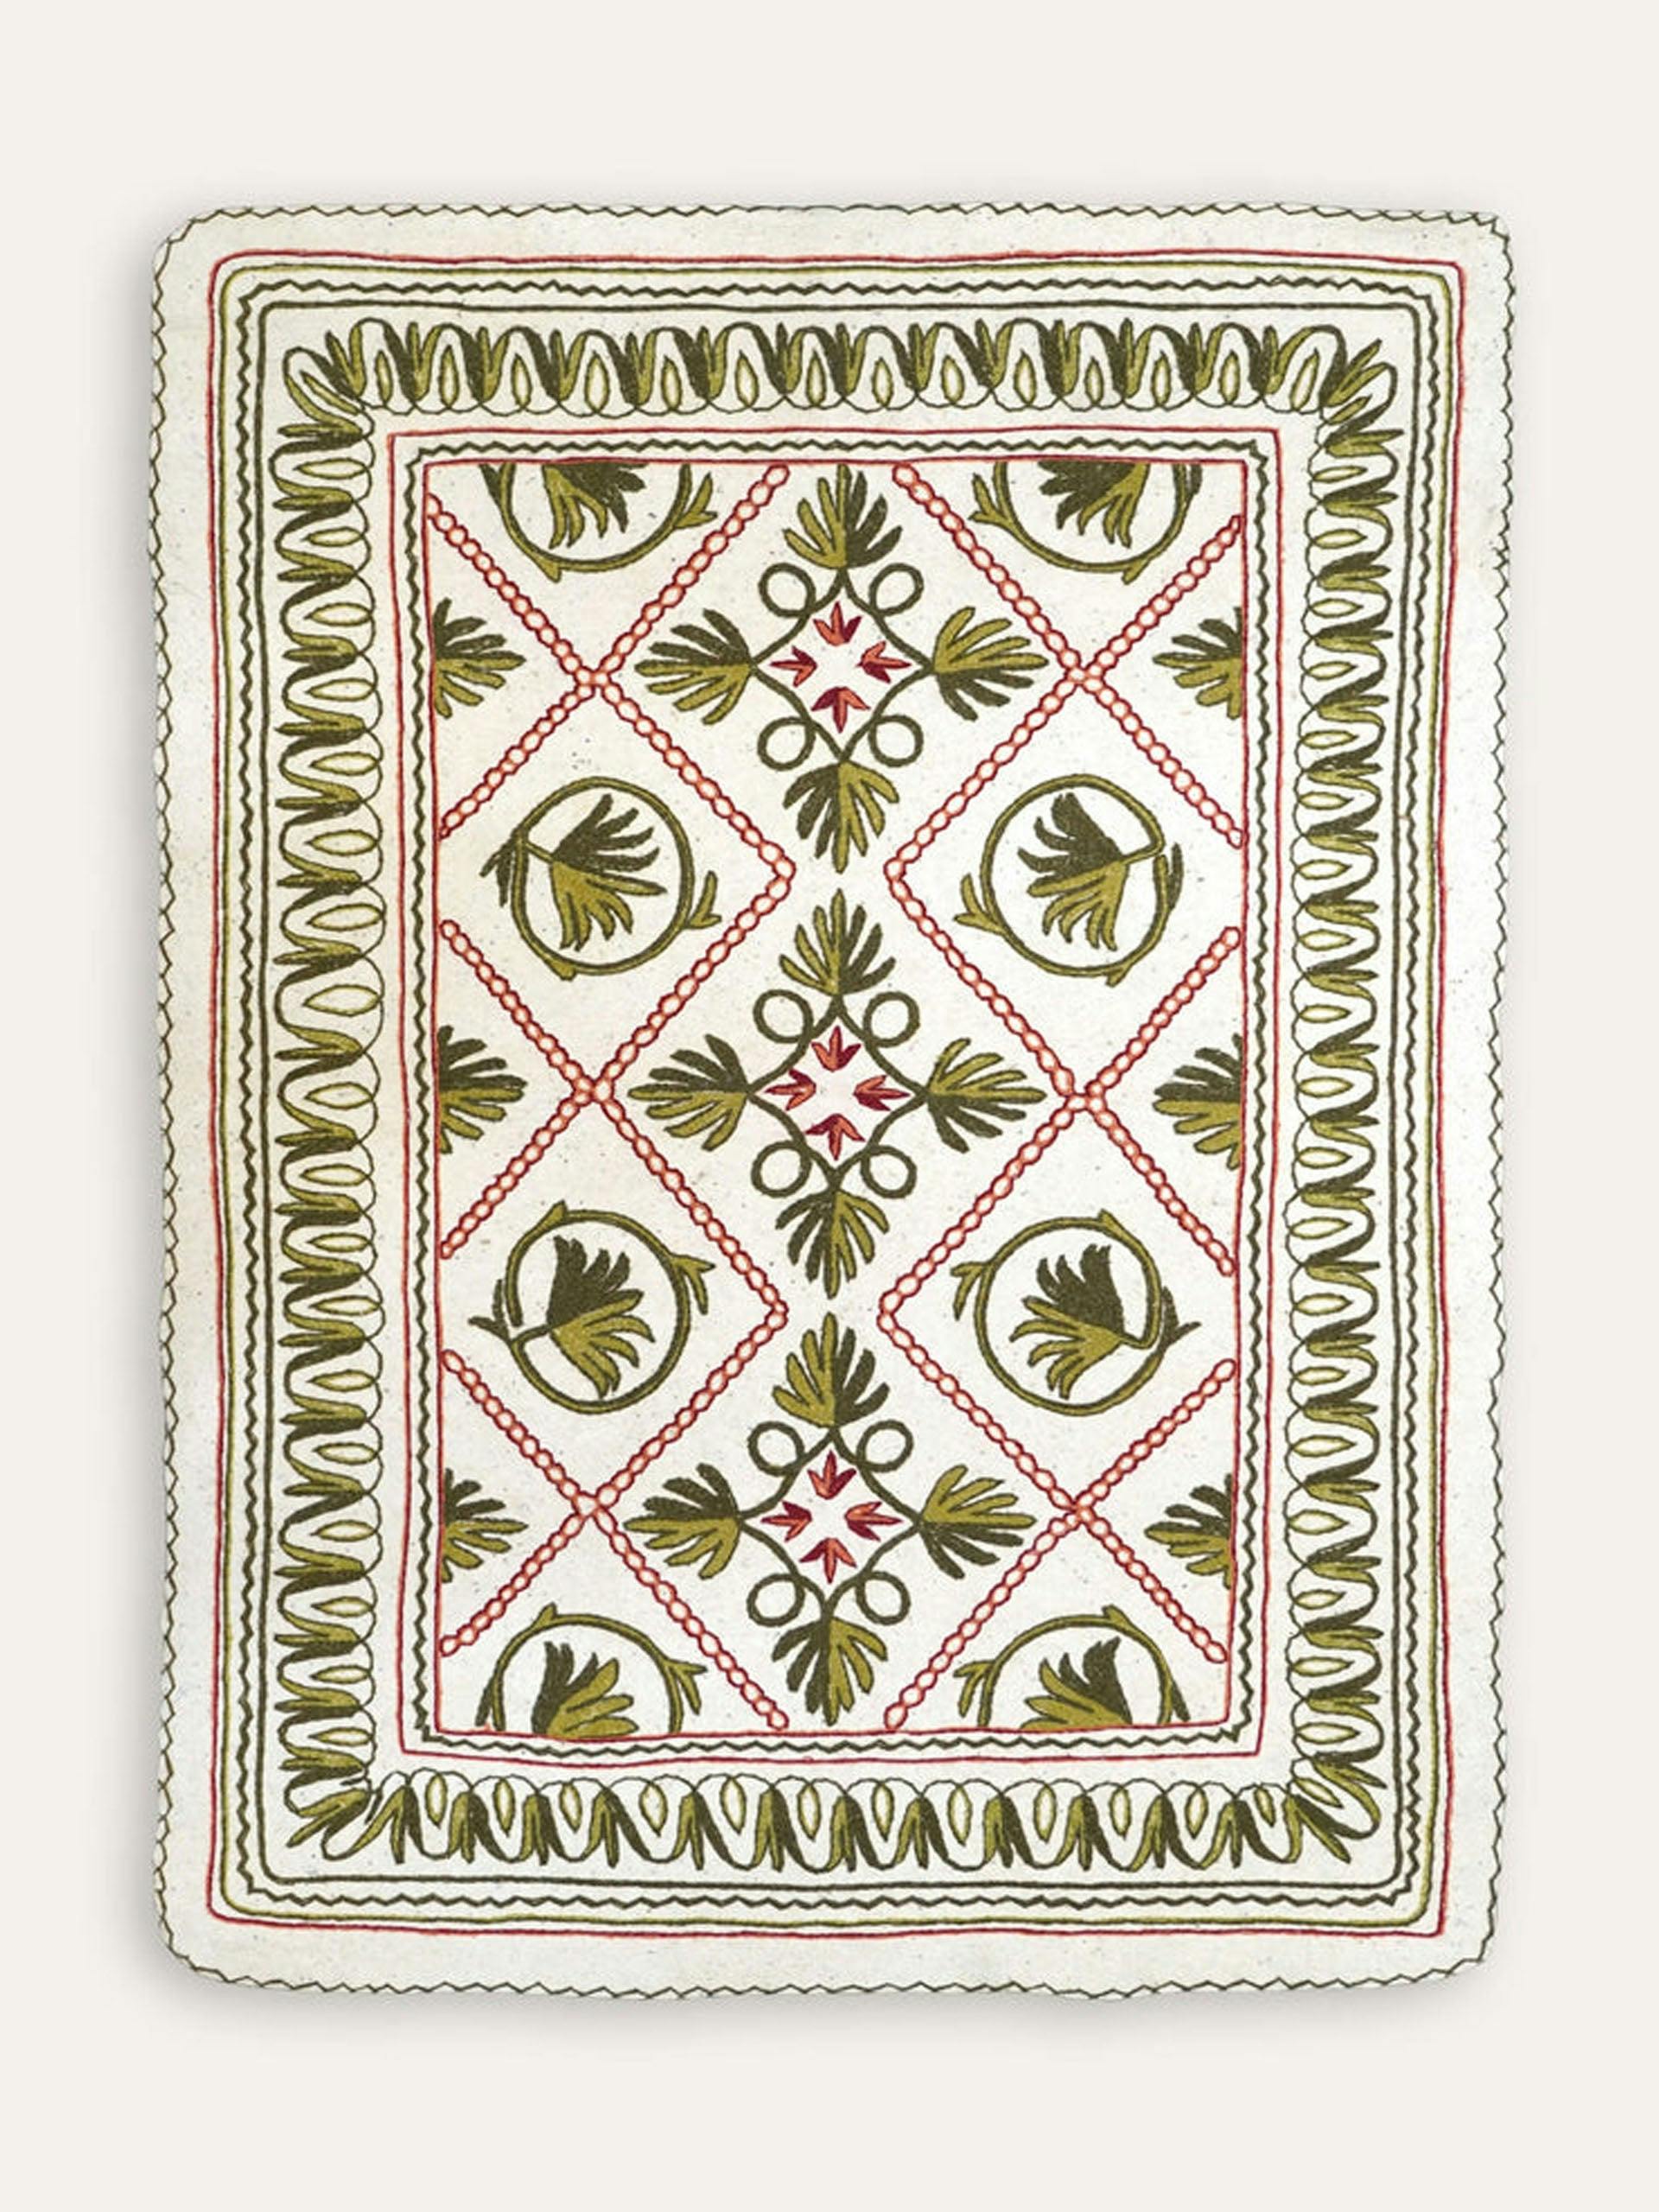 Namda felt embroidered rug in green/pink